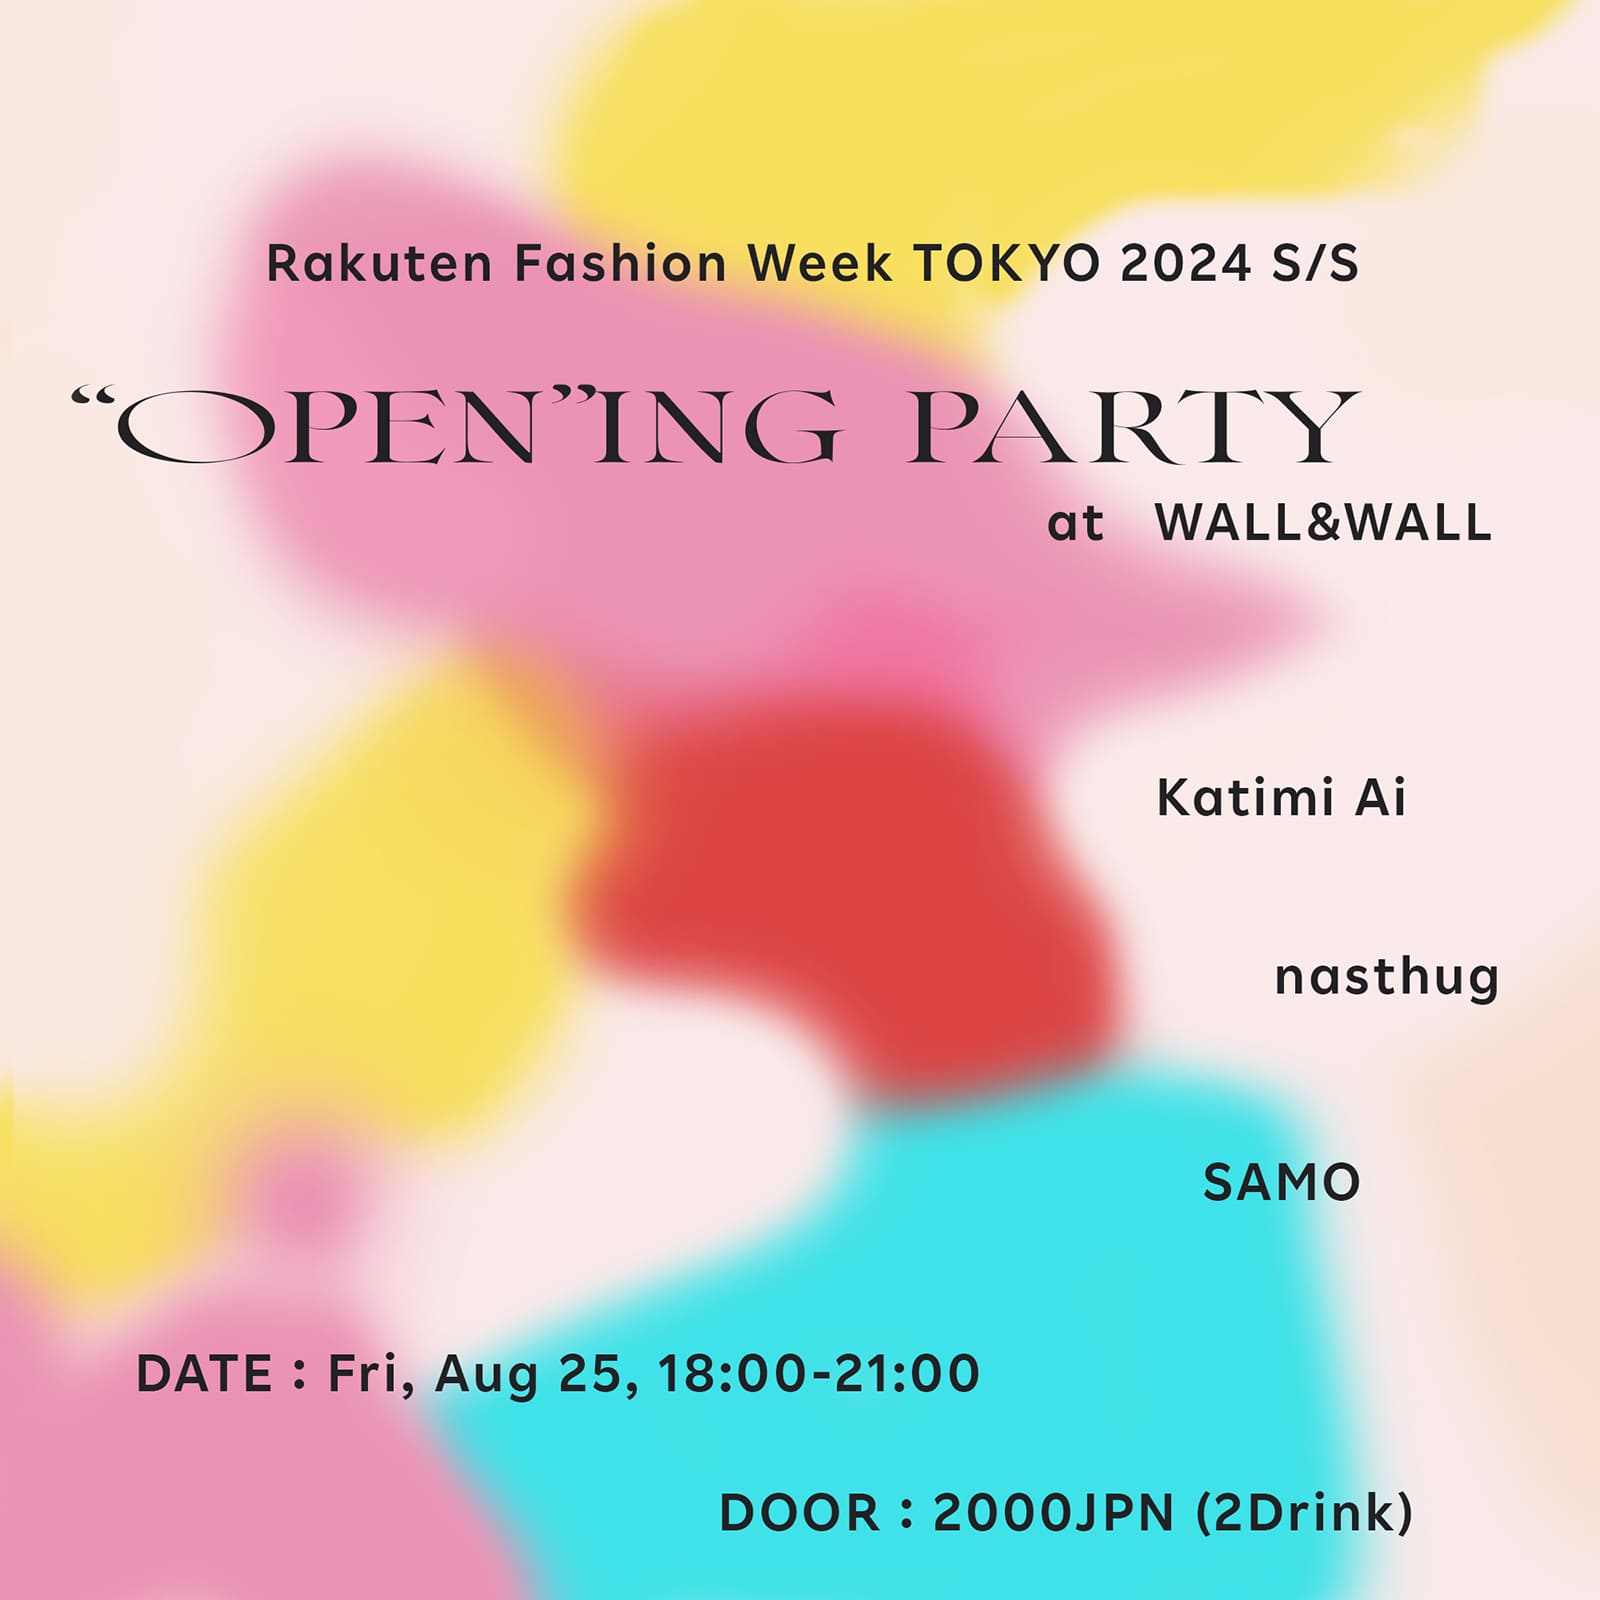 8/25(FRI) Rakuten Fashion Week TOKYO 2024 S/S “OPEN”ING PARTY at WALL&WALL